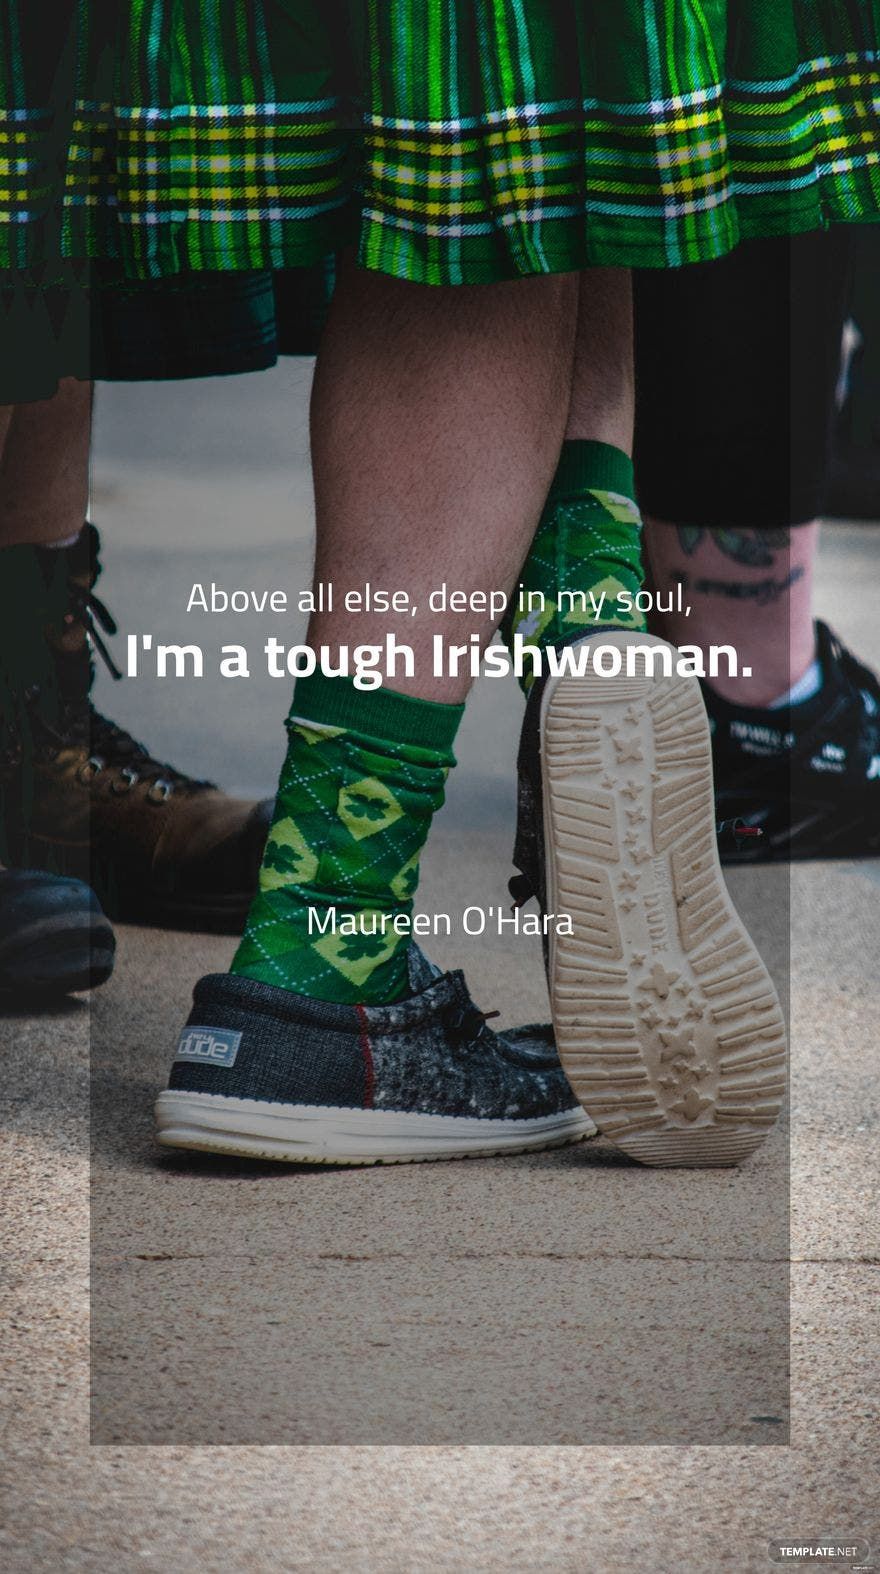 Maureen O'Hara - Above all else, deep in my soul, I'm a tough Irishwoman.